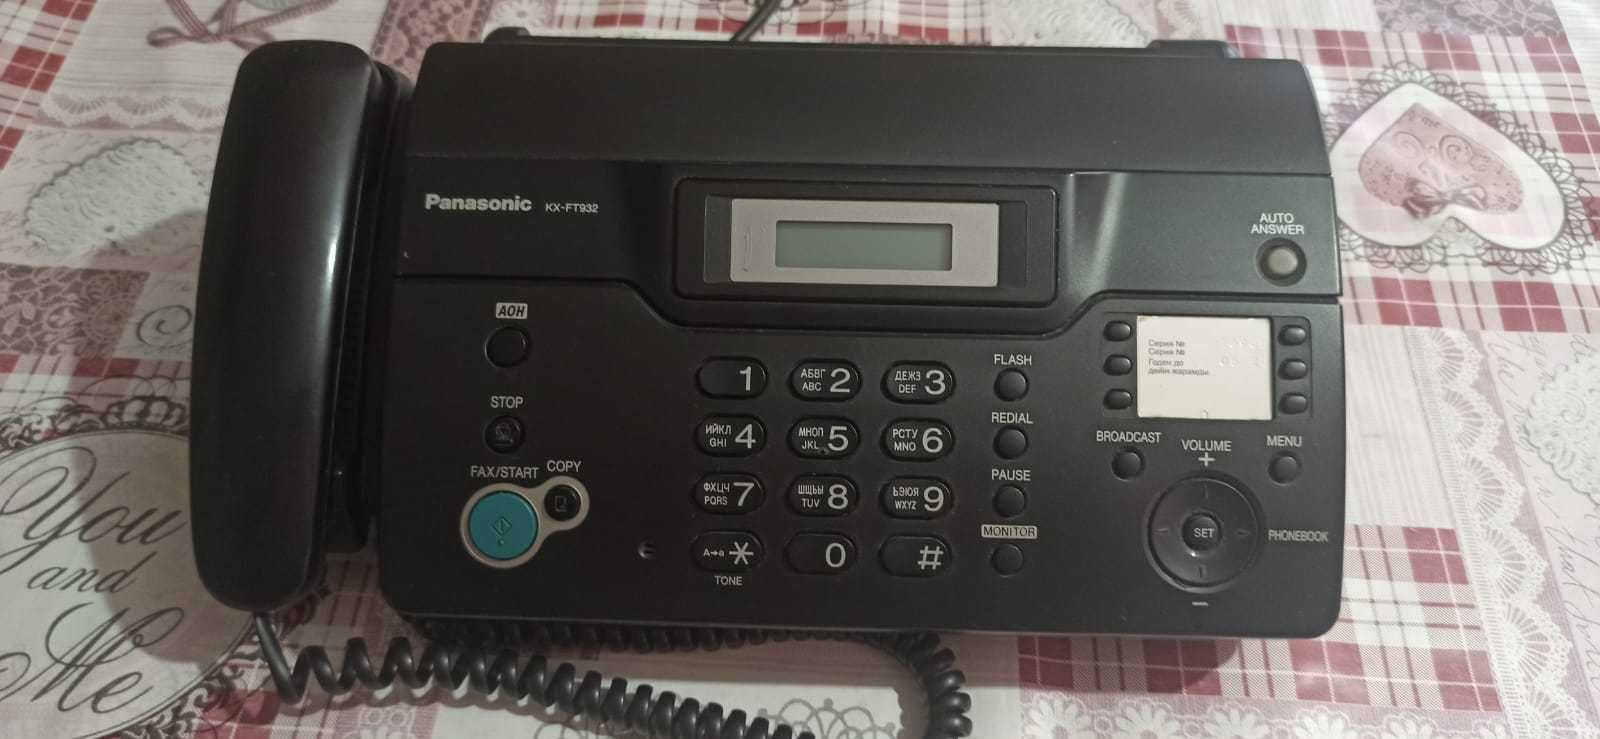 телефон-факс Panasonic kx-ft932